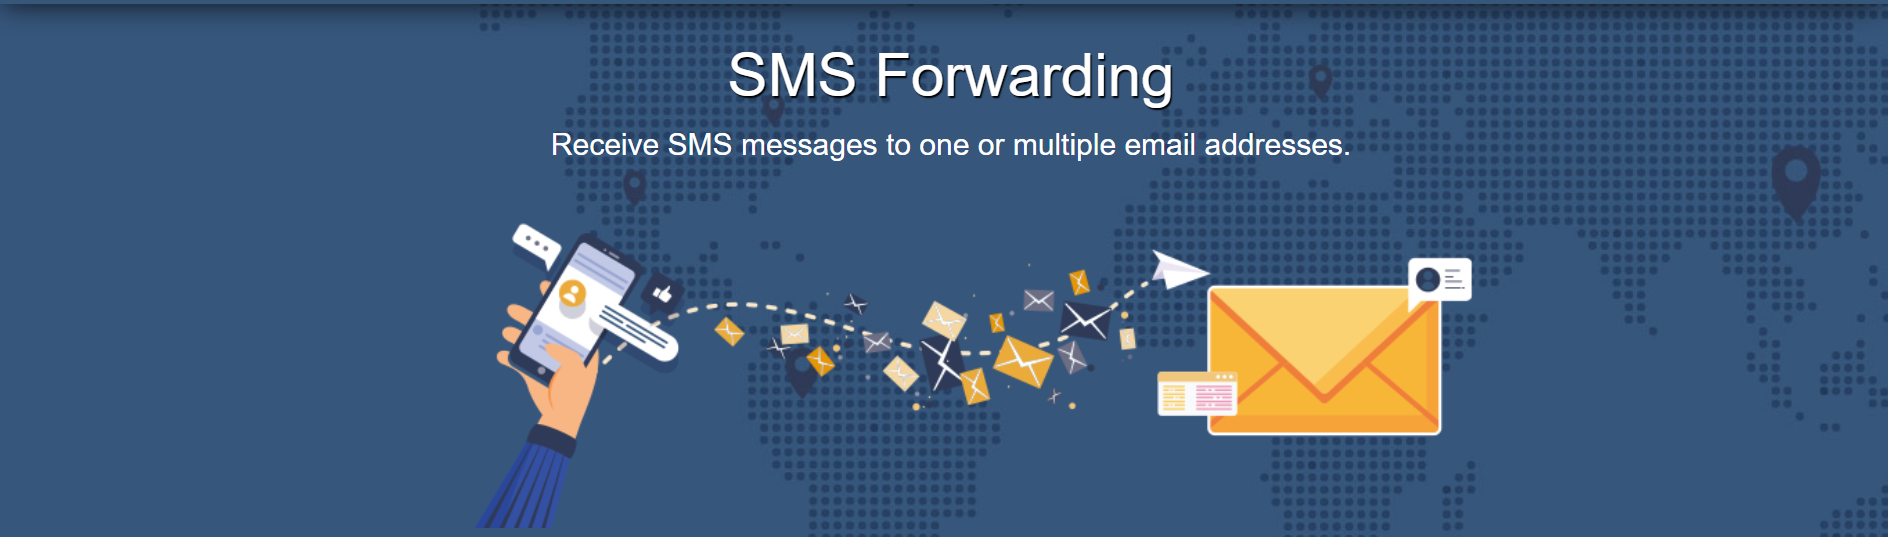 SMS Forwarding